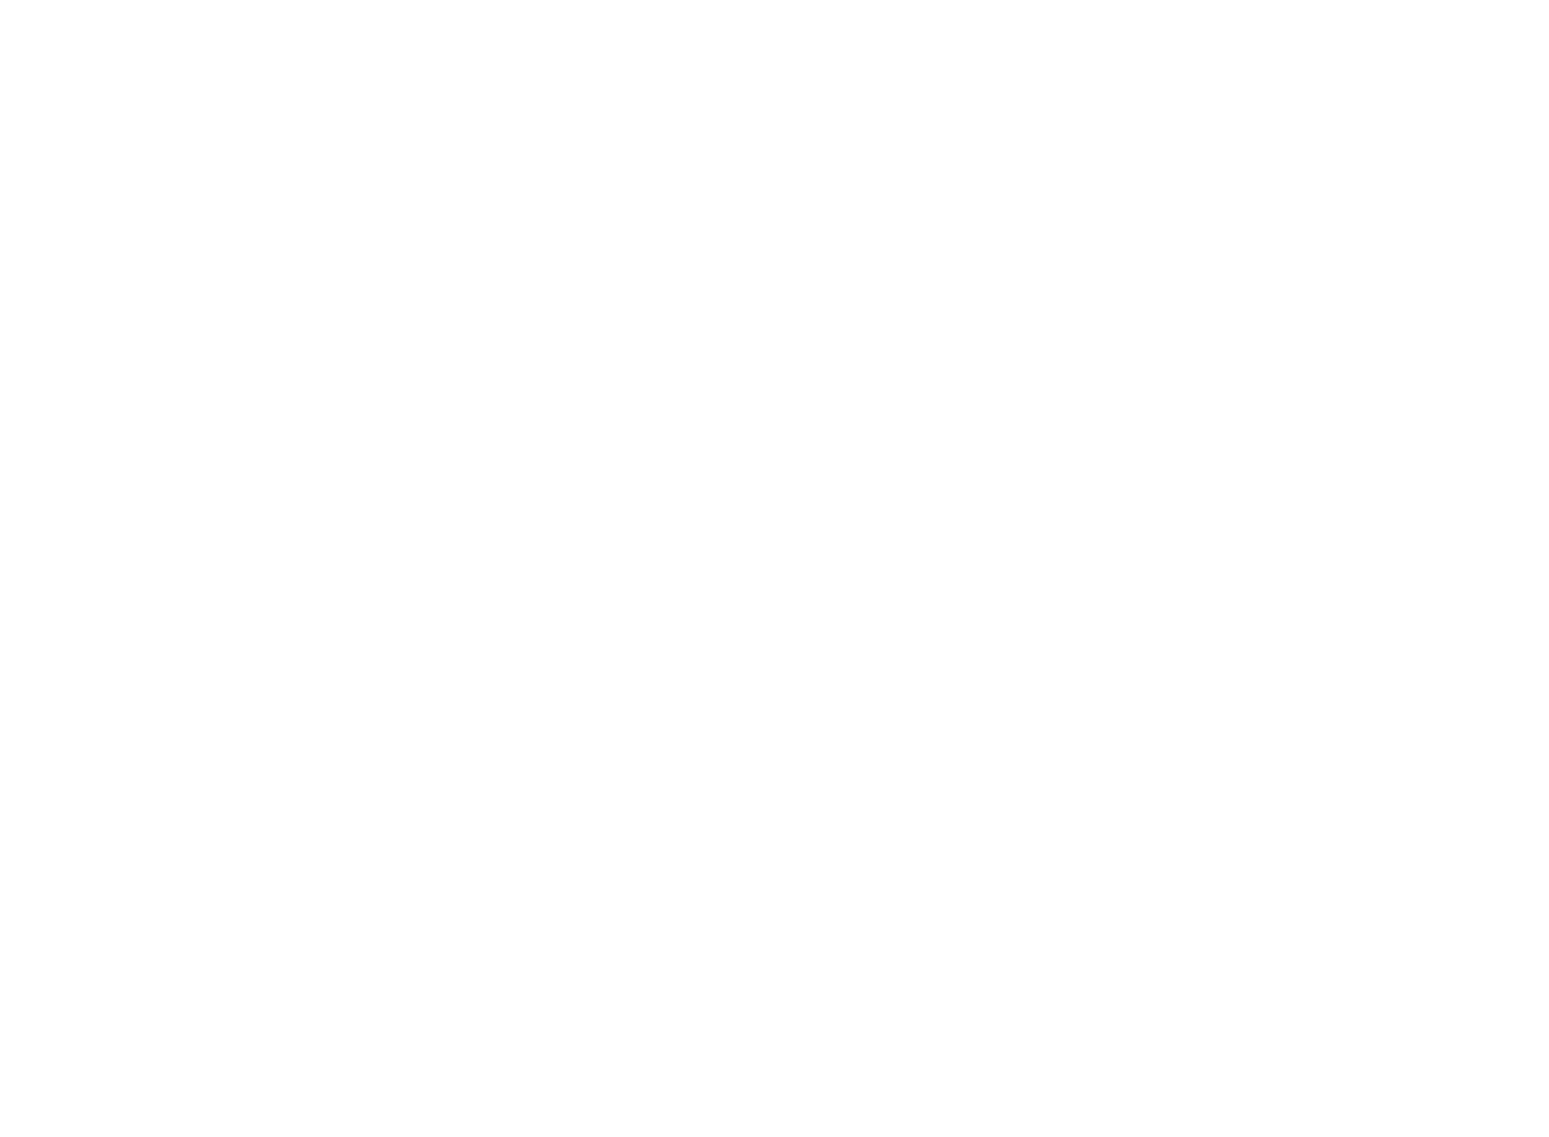 Methanol Chemicals Company logo large for dark backgrounds (transparent PNG)